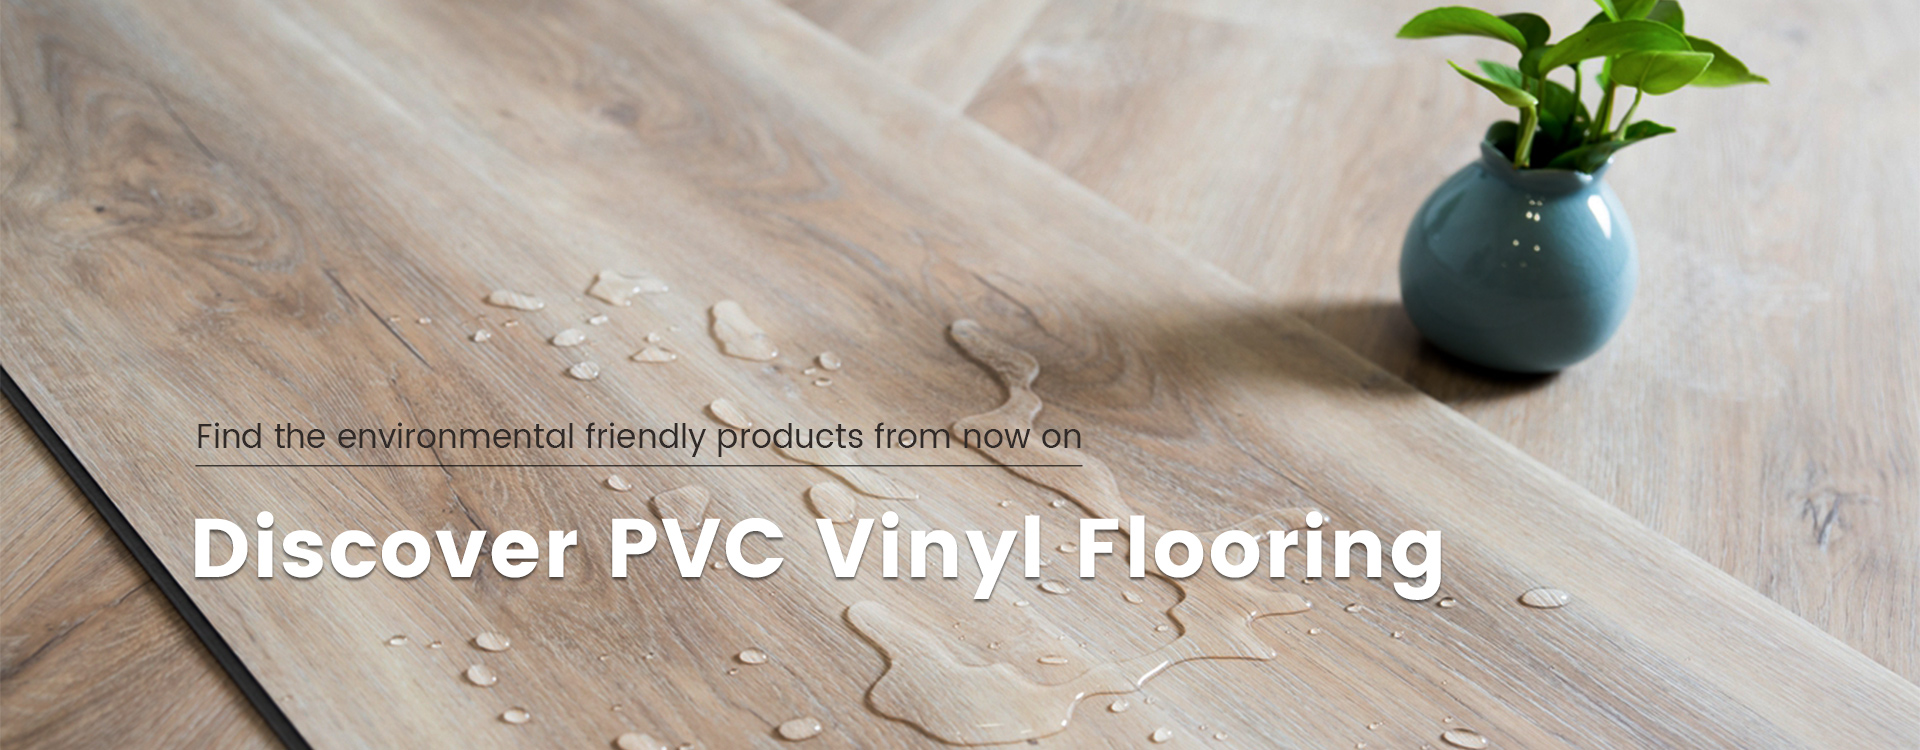 PVC Vinyl Flooring